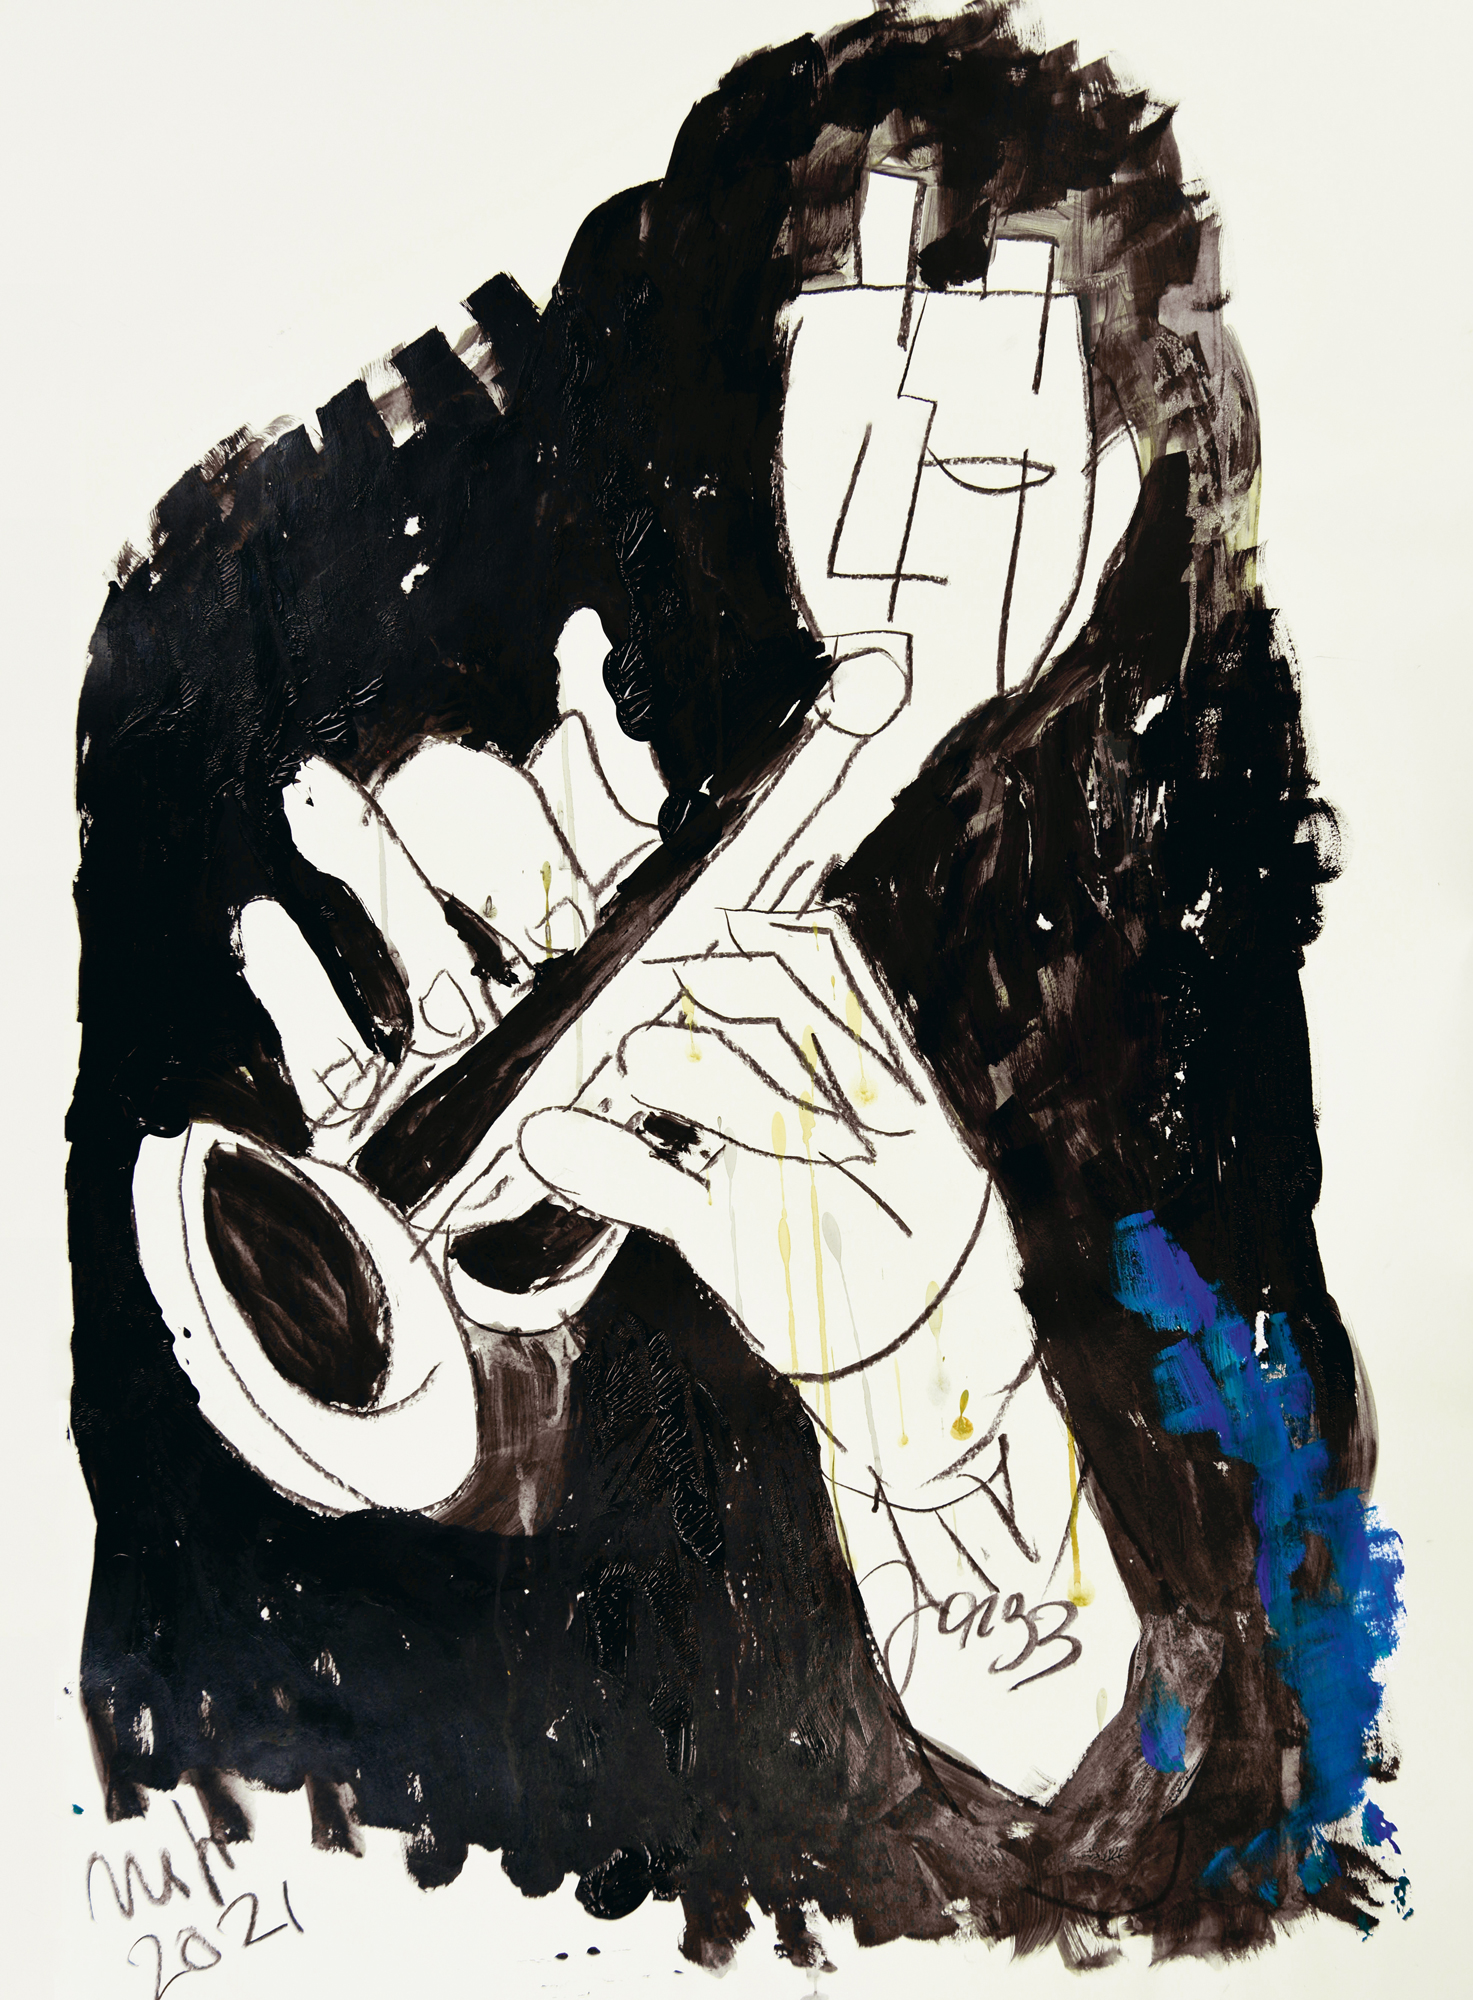 Armin Mueller-Stahl
Jazz, 2021
Acryl, Kohle auf Papier, 100 x 70 cm
© VG Bild-Kunst, Bonn 2022
Foto: Kunsthalle Rostock